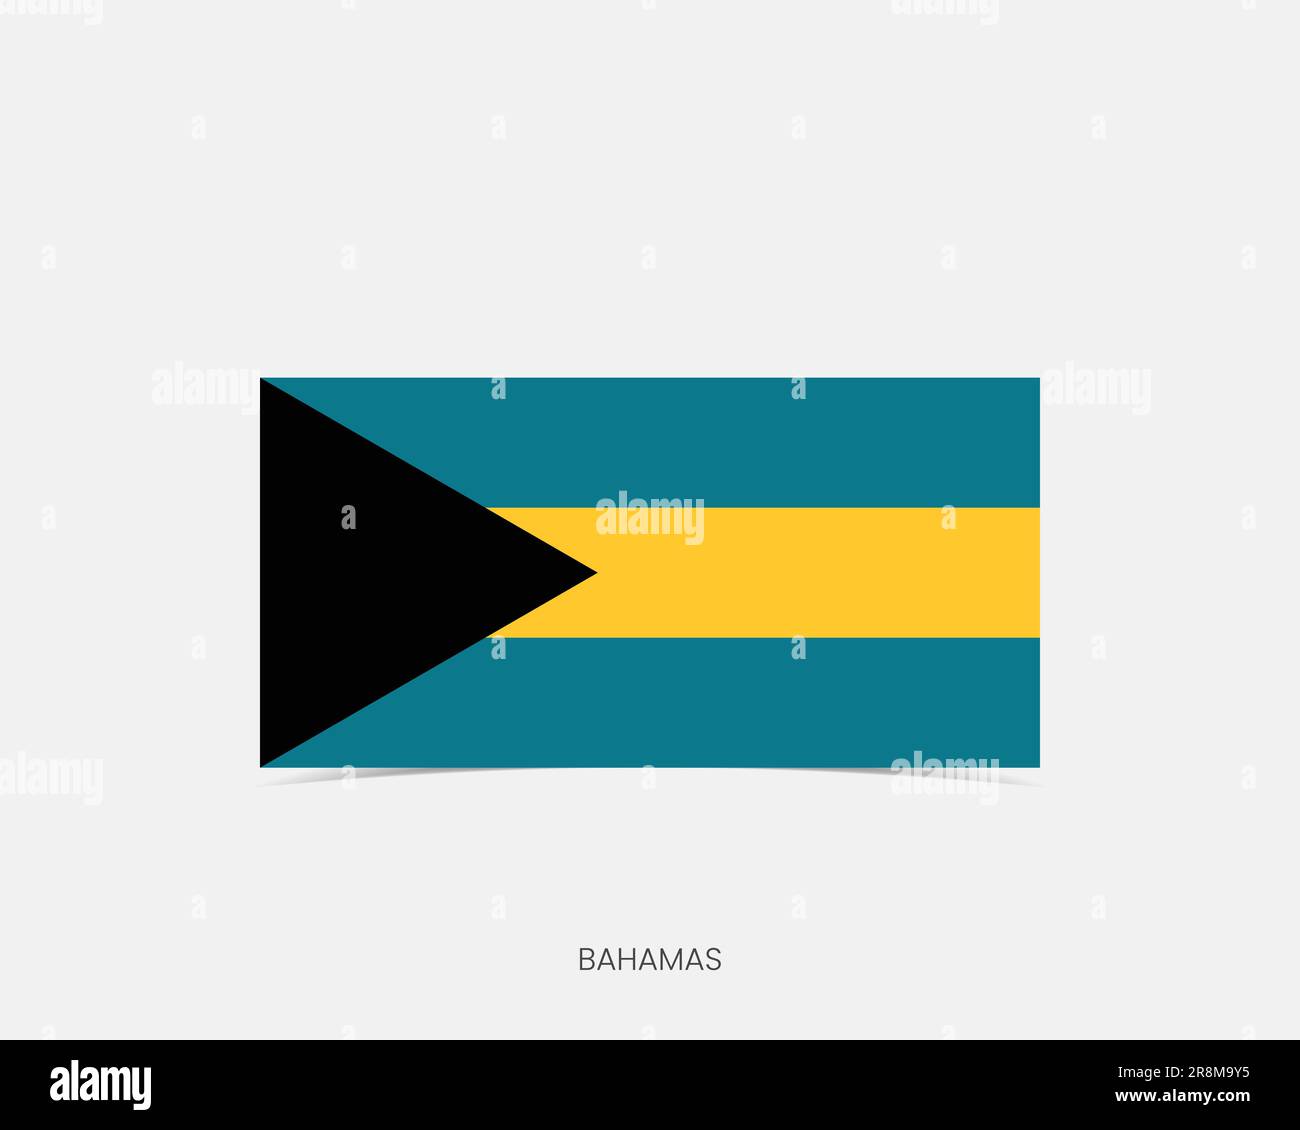 Bahamas Rectangle flag icon with shadow. Stock Vector